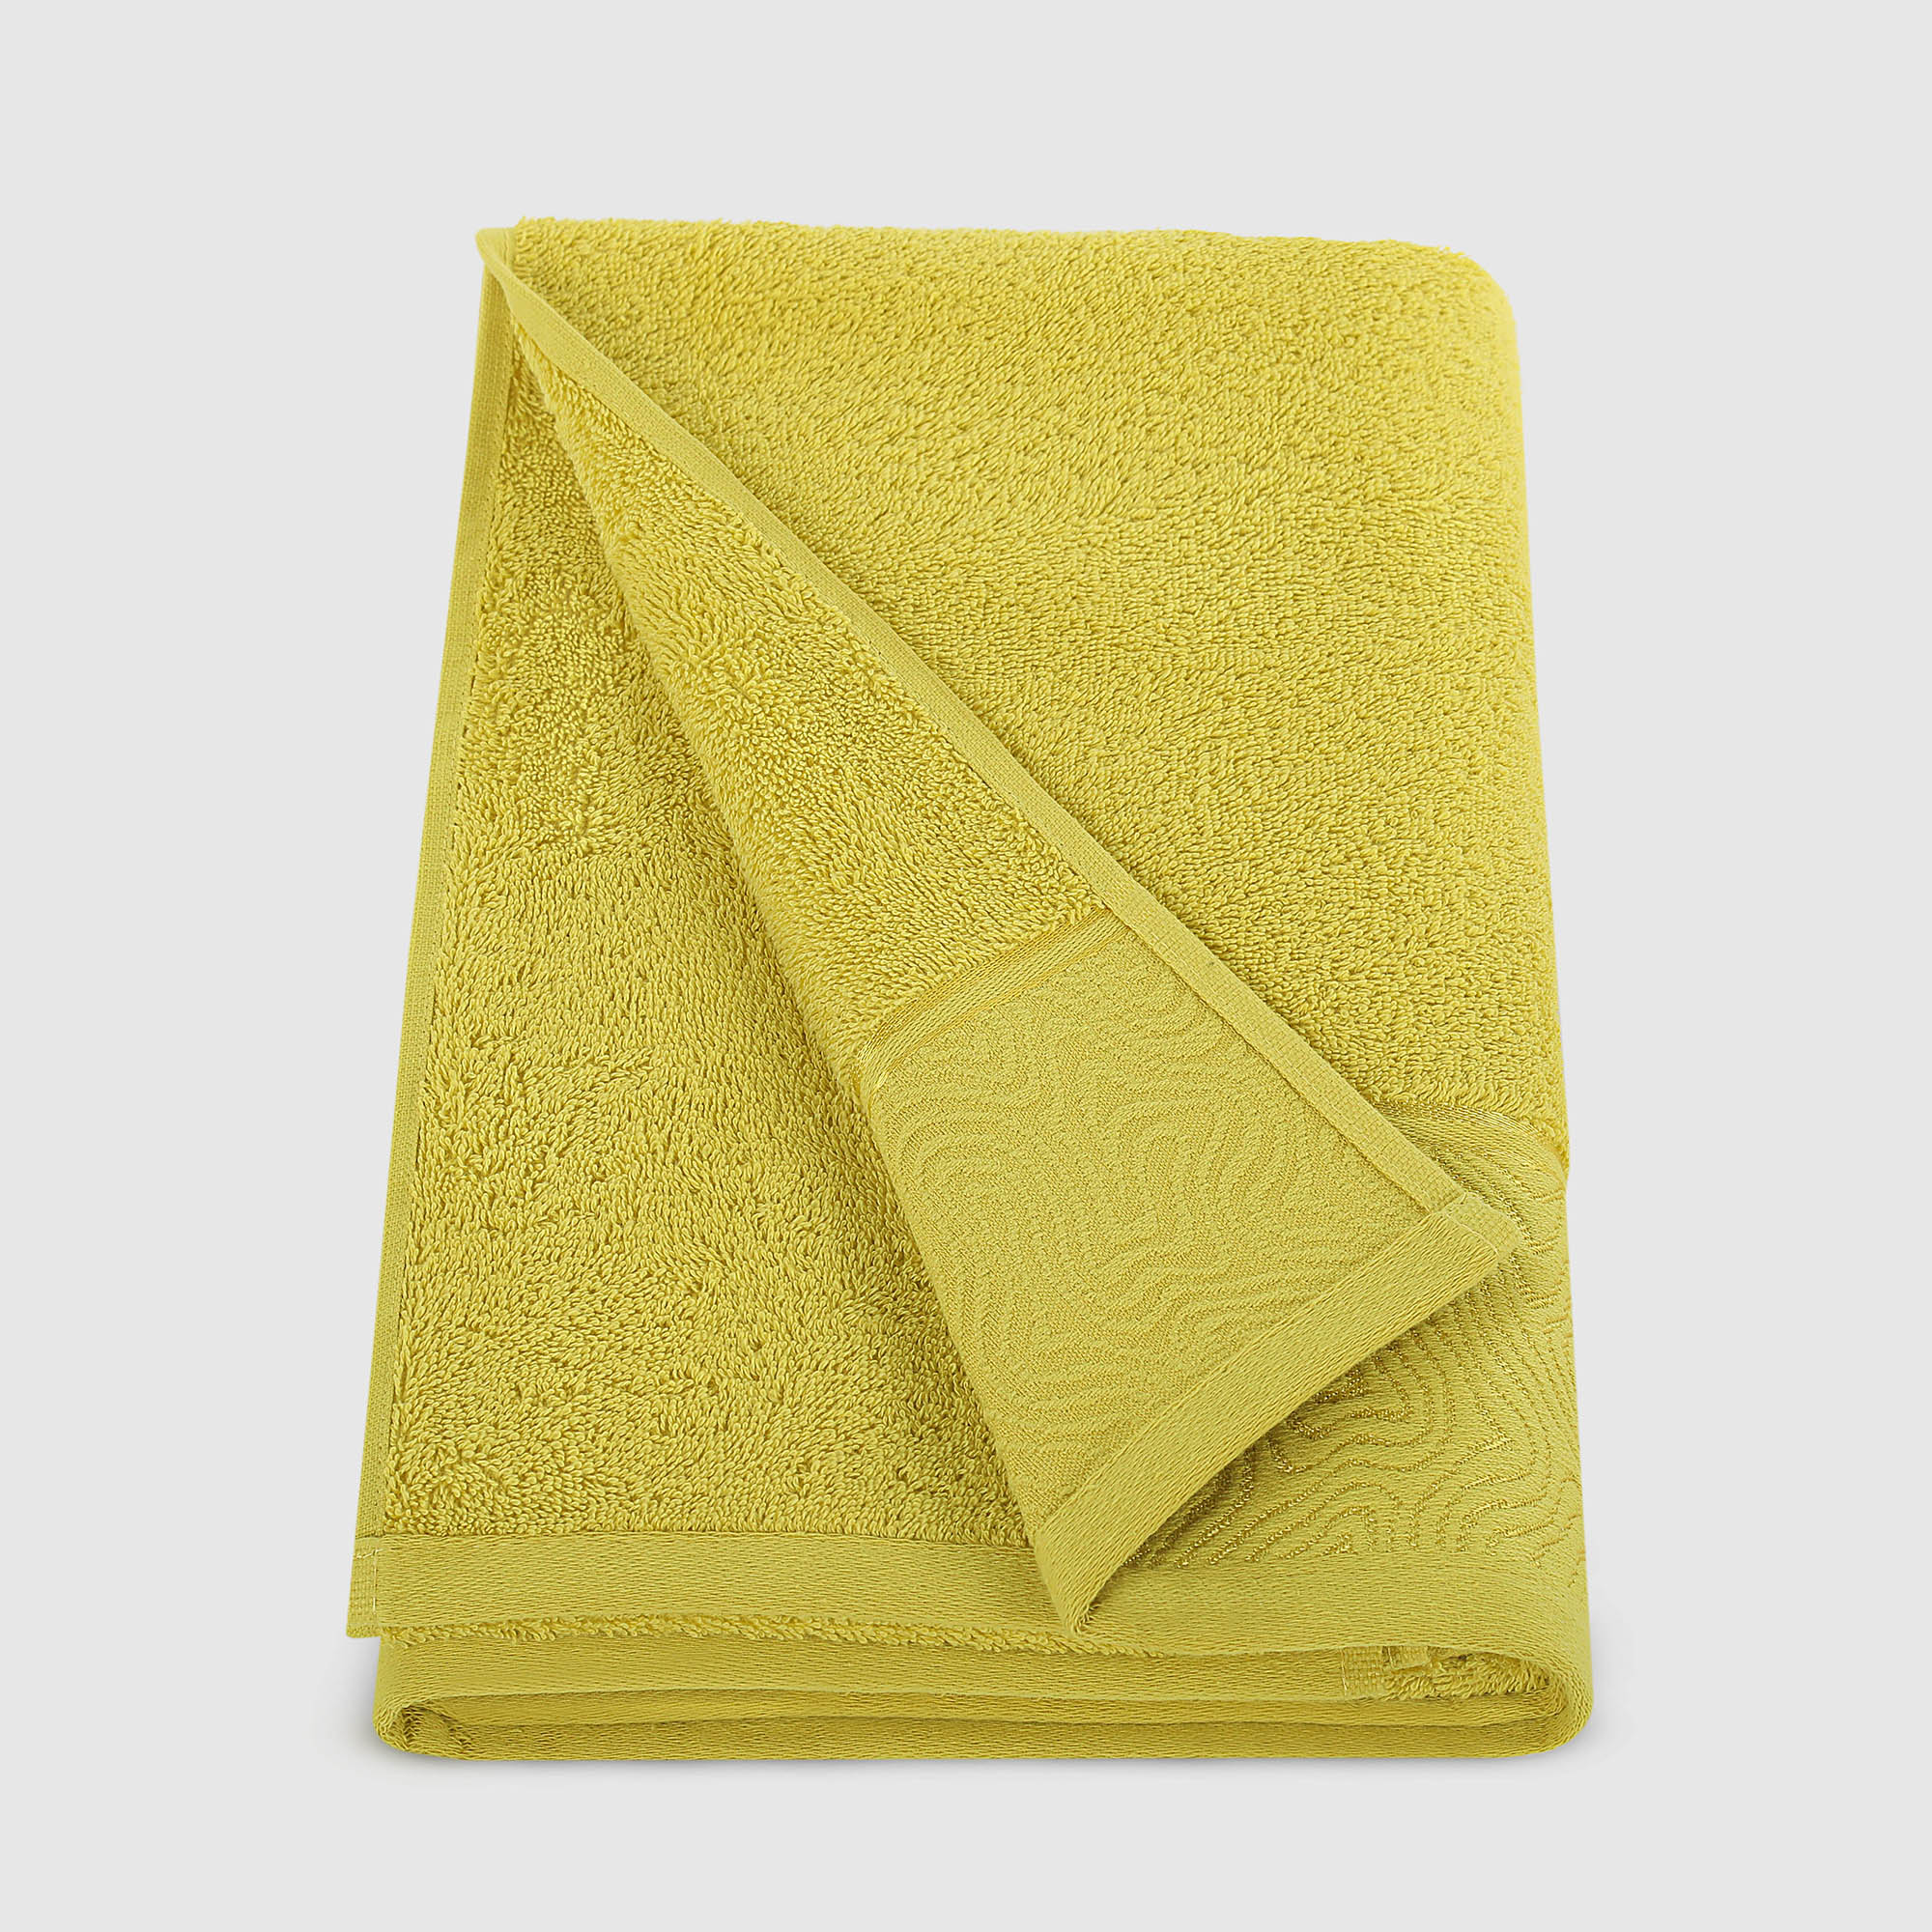 Полотенце банное Asil Fold лимонный 70x140 см полотенце банное asil poly светло коричневый 50x90 см